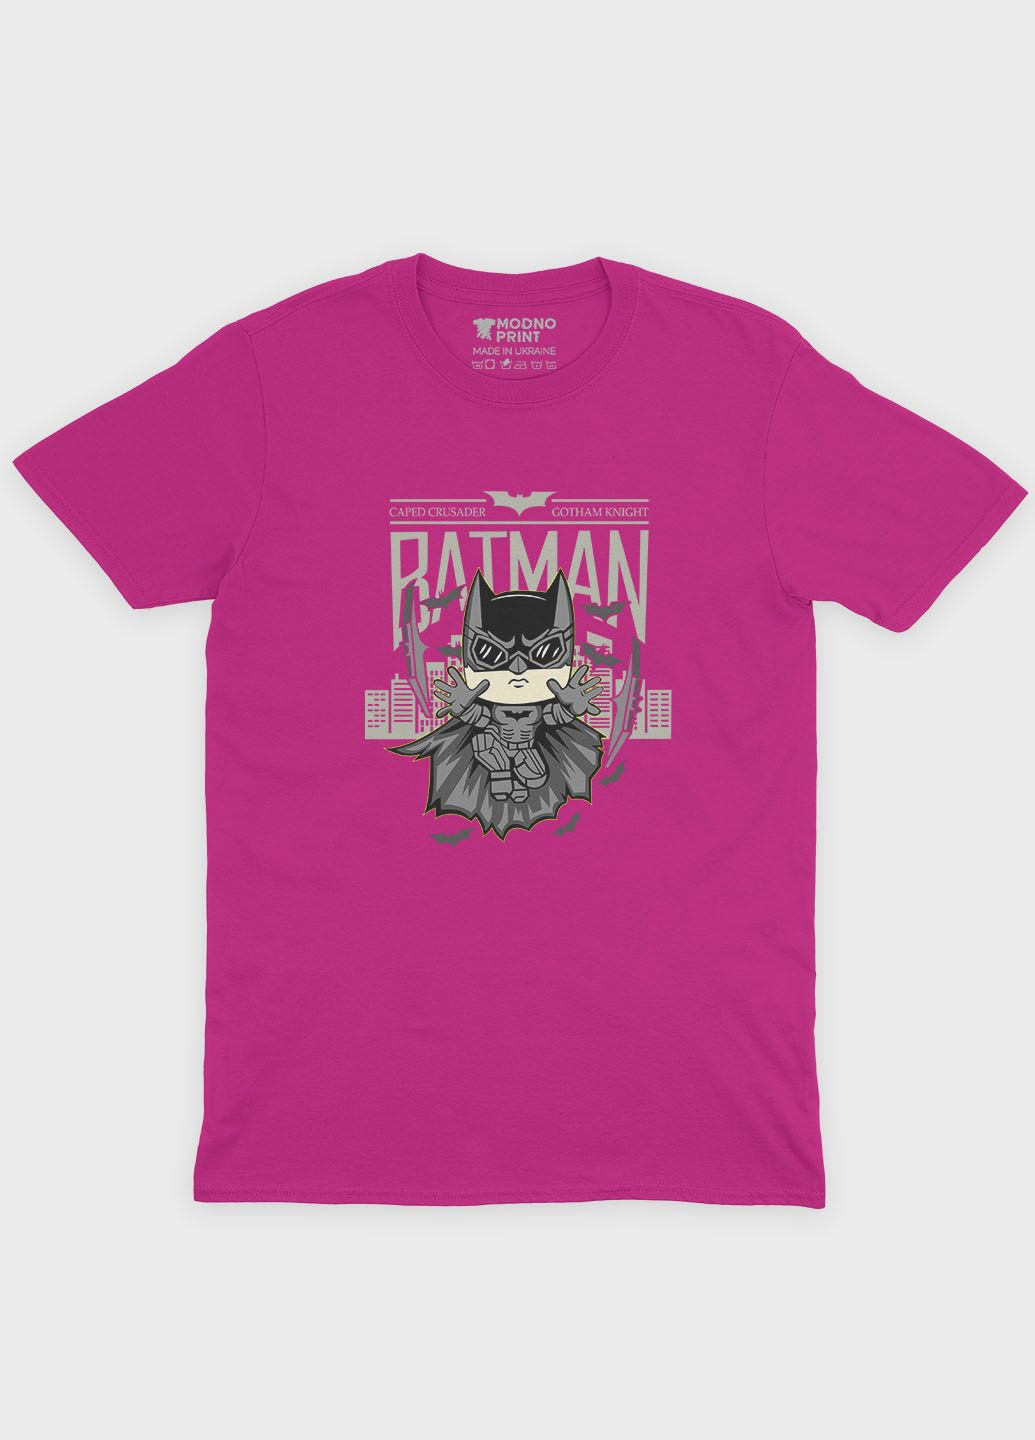 Розовая демисезонная футболка для мальчика с принтом супергероя - бэтмен (ts001-1-fuxj-006-003-037-b) Modno